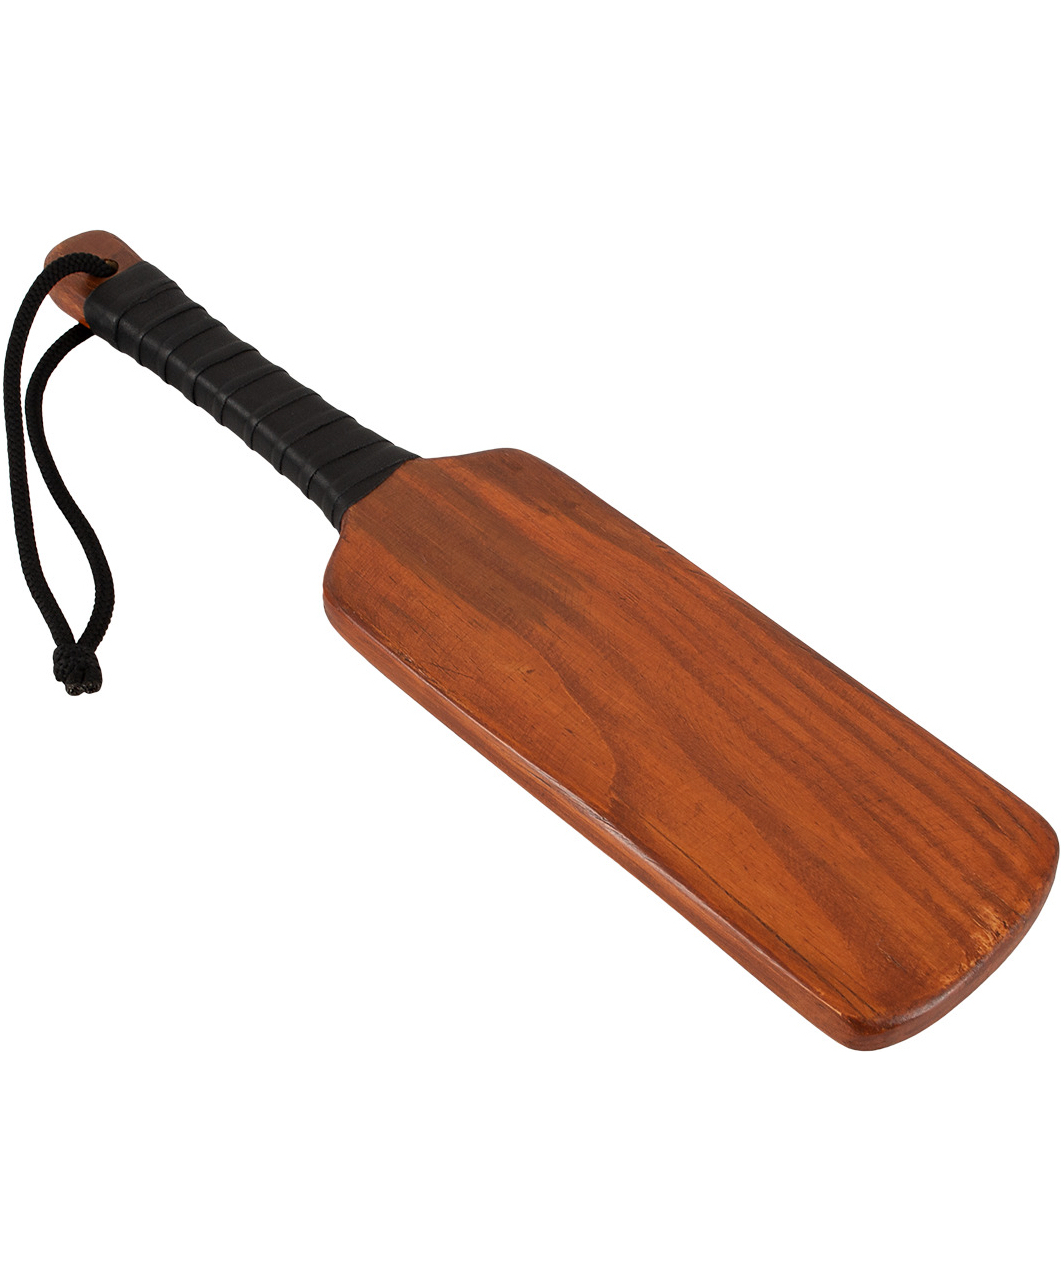 Zado brown wooden spanking paddle